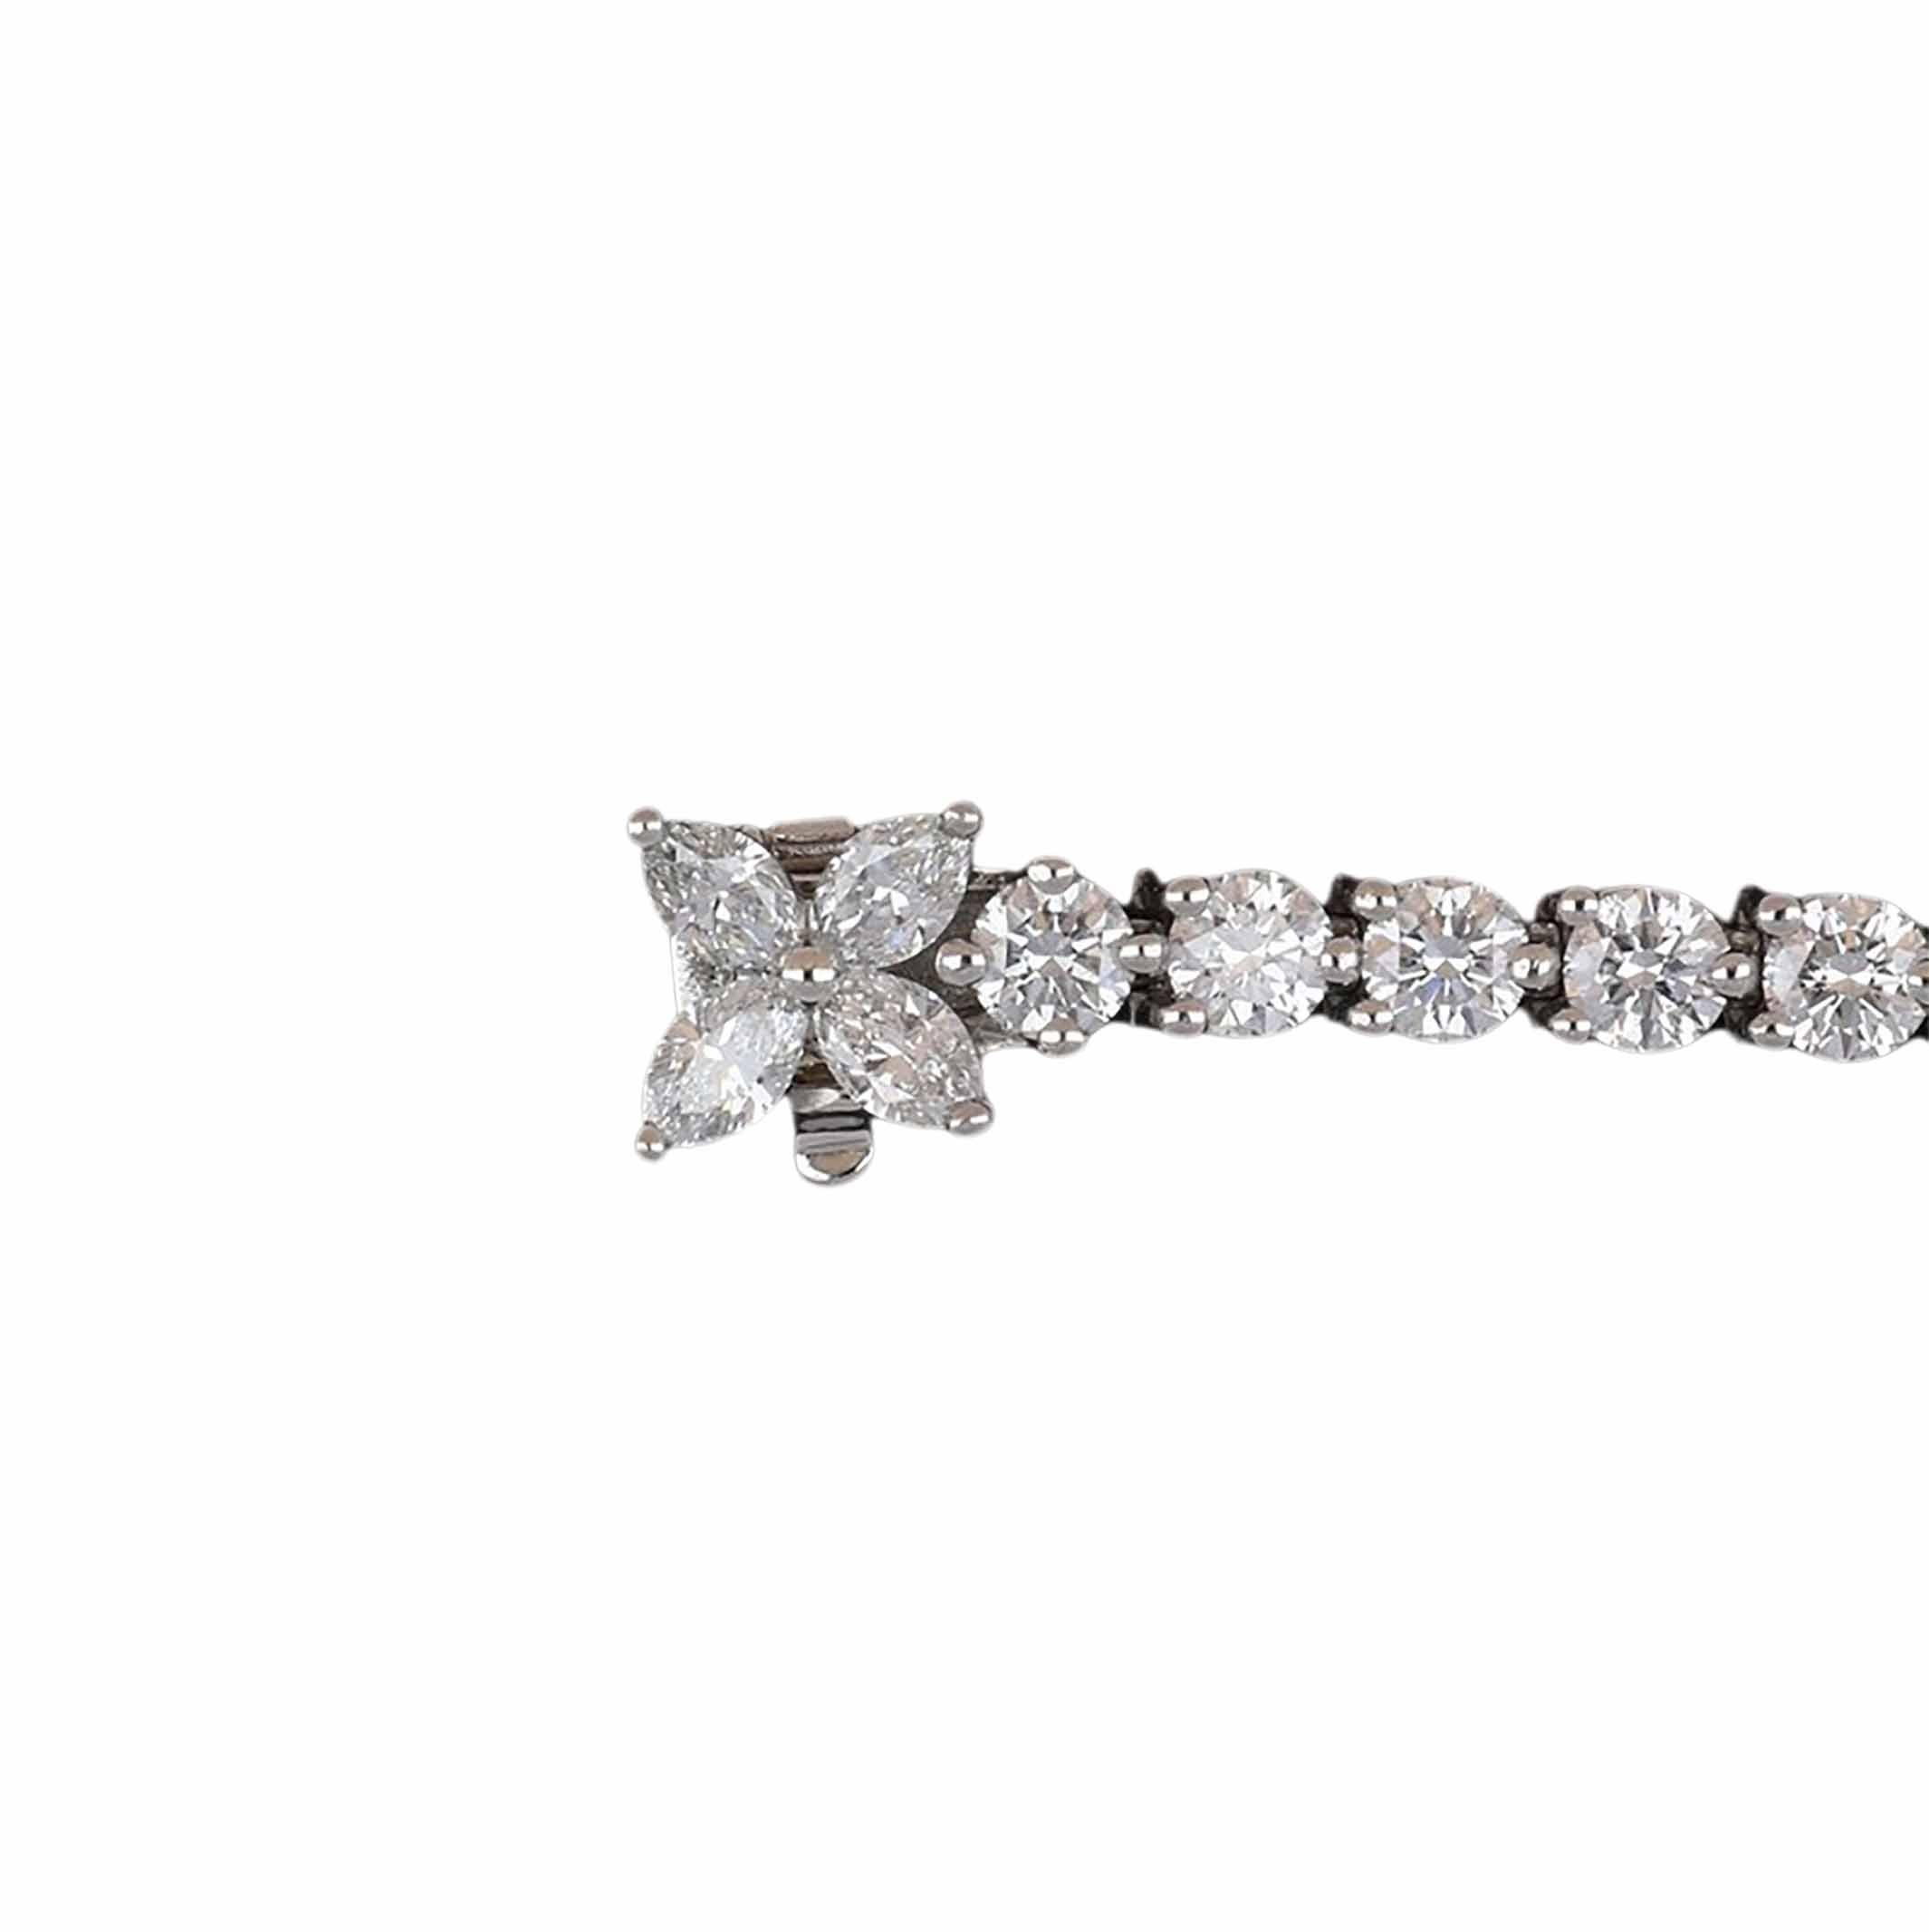 An estate Tiffany & Co. platinum round brilliant-cut diamond line bracelet from the 